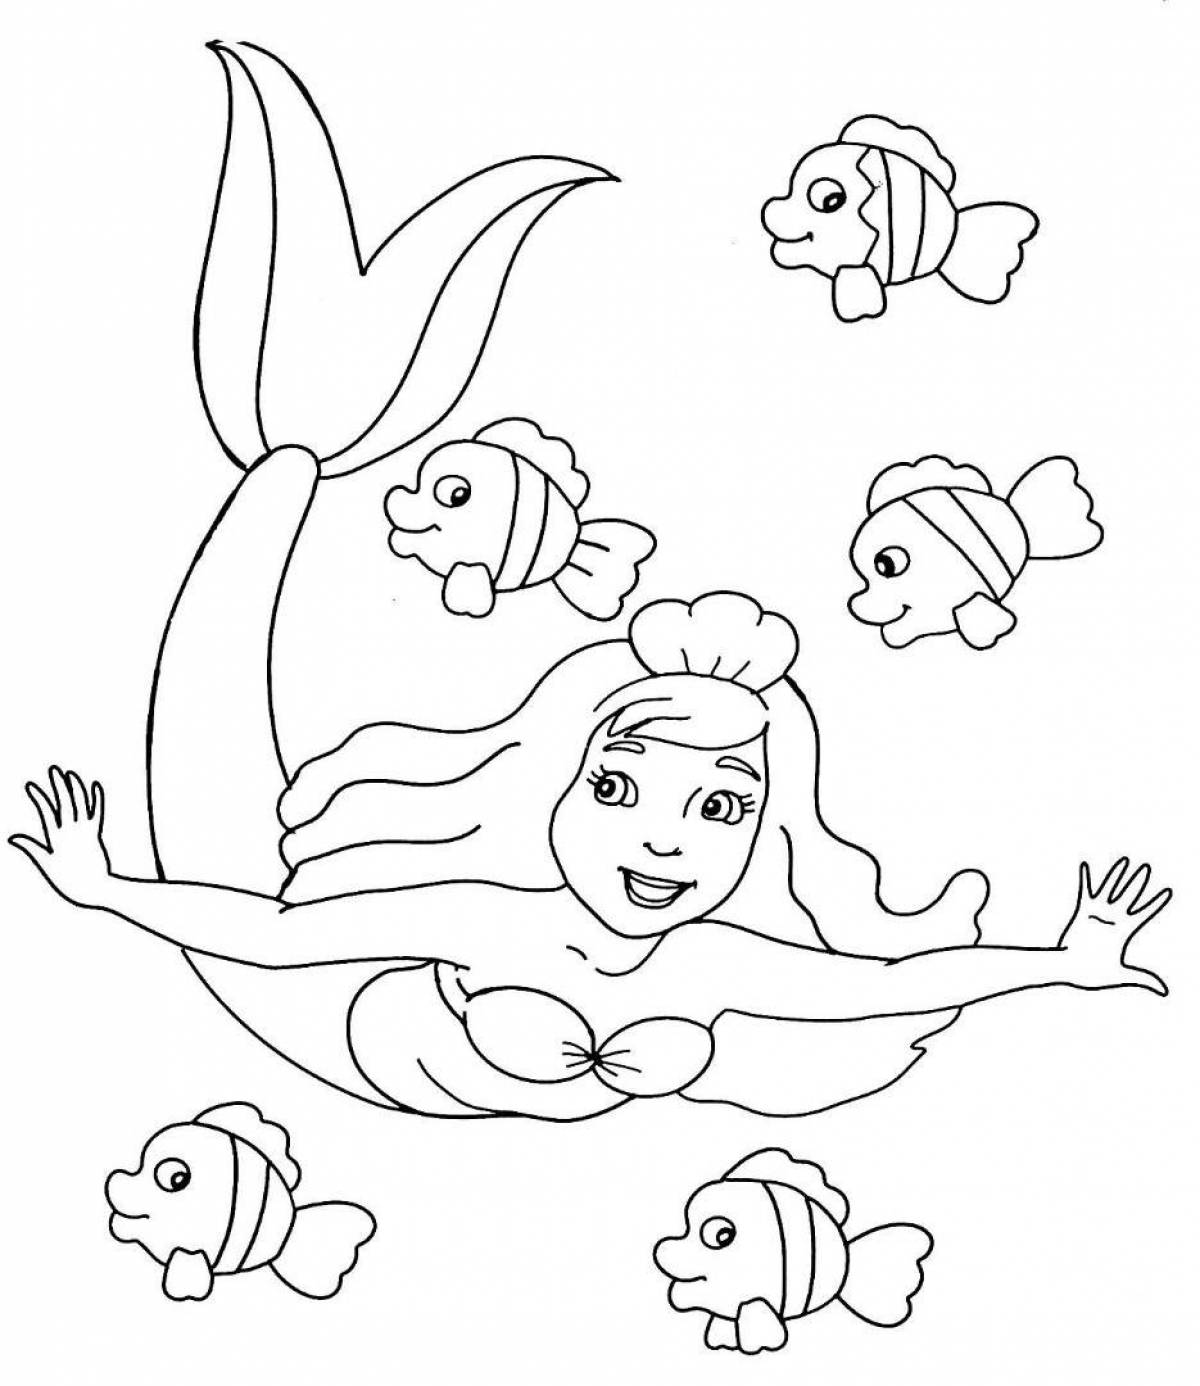 Bright coloring mermaid for kids